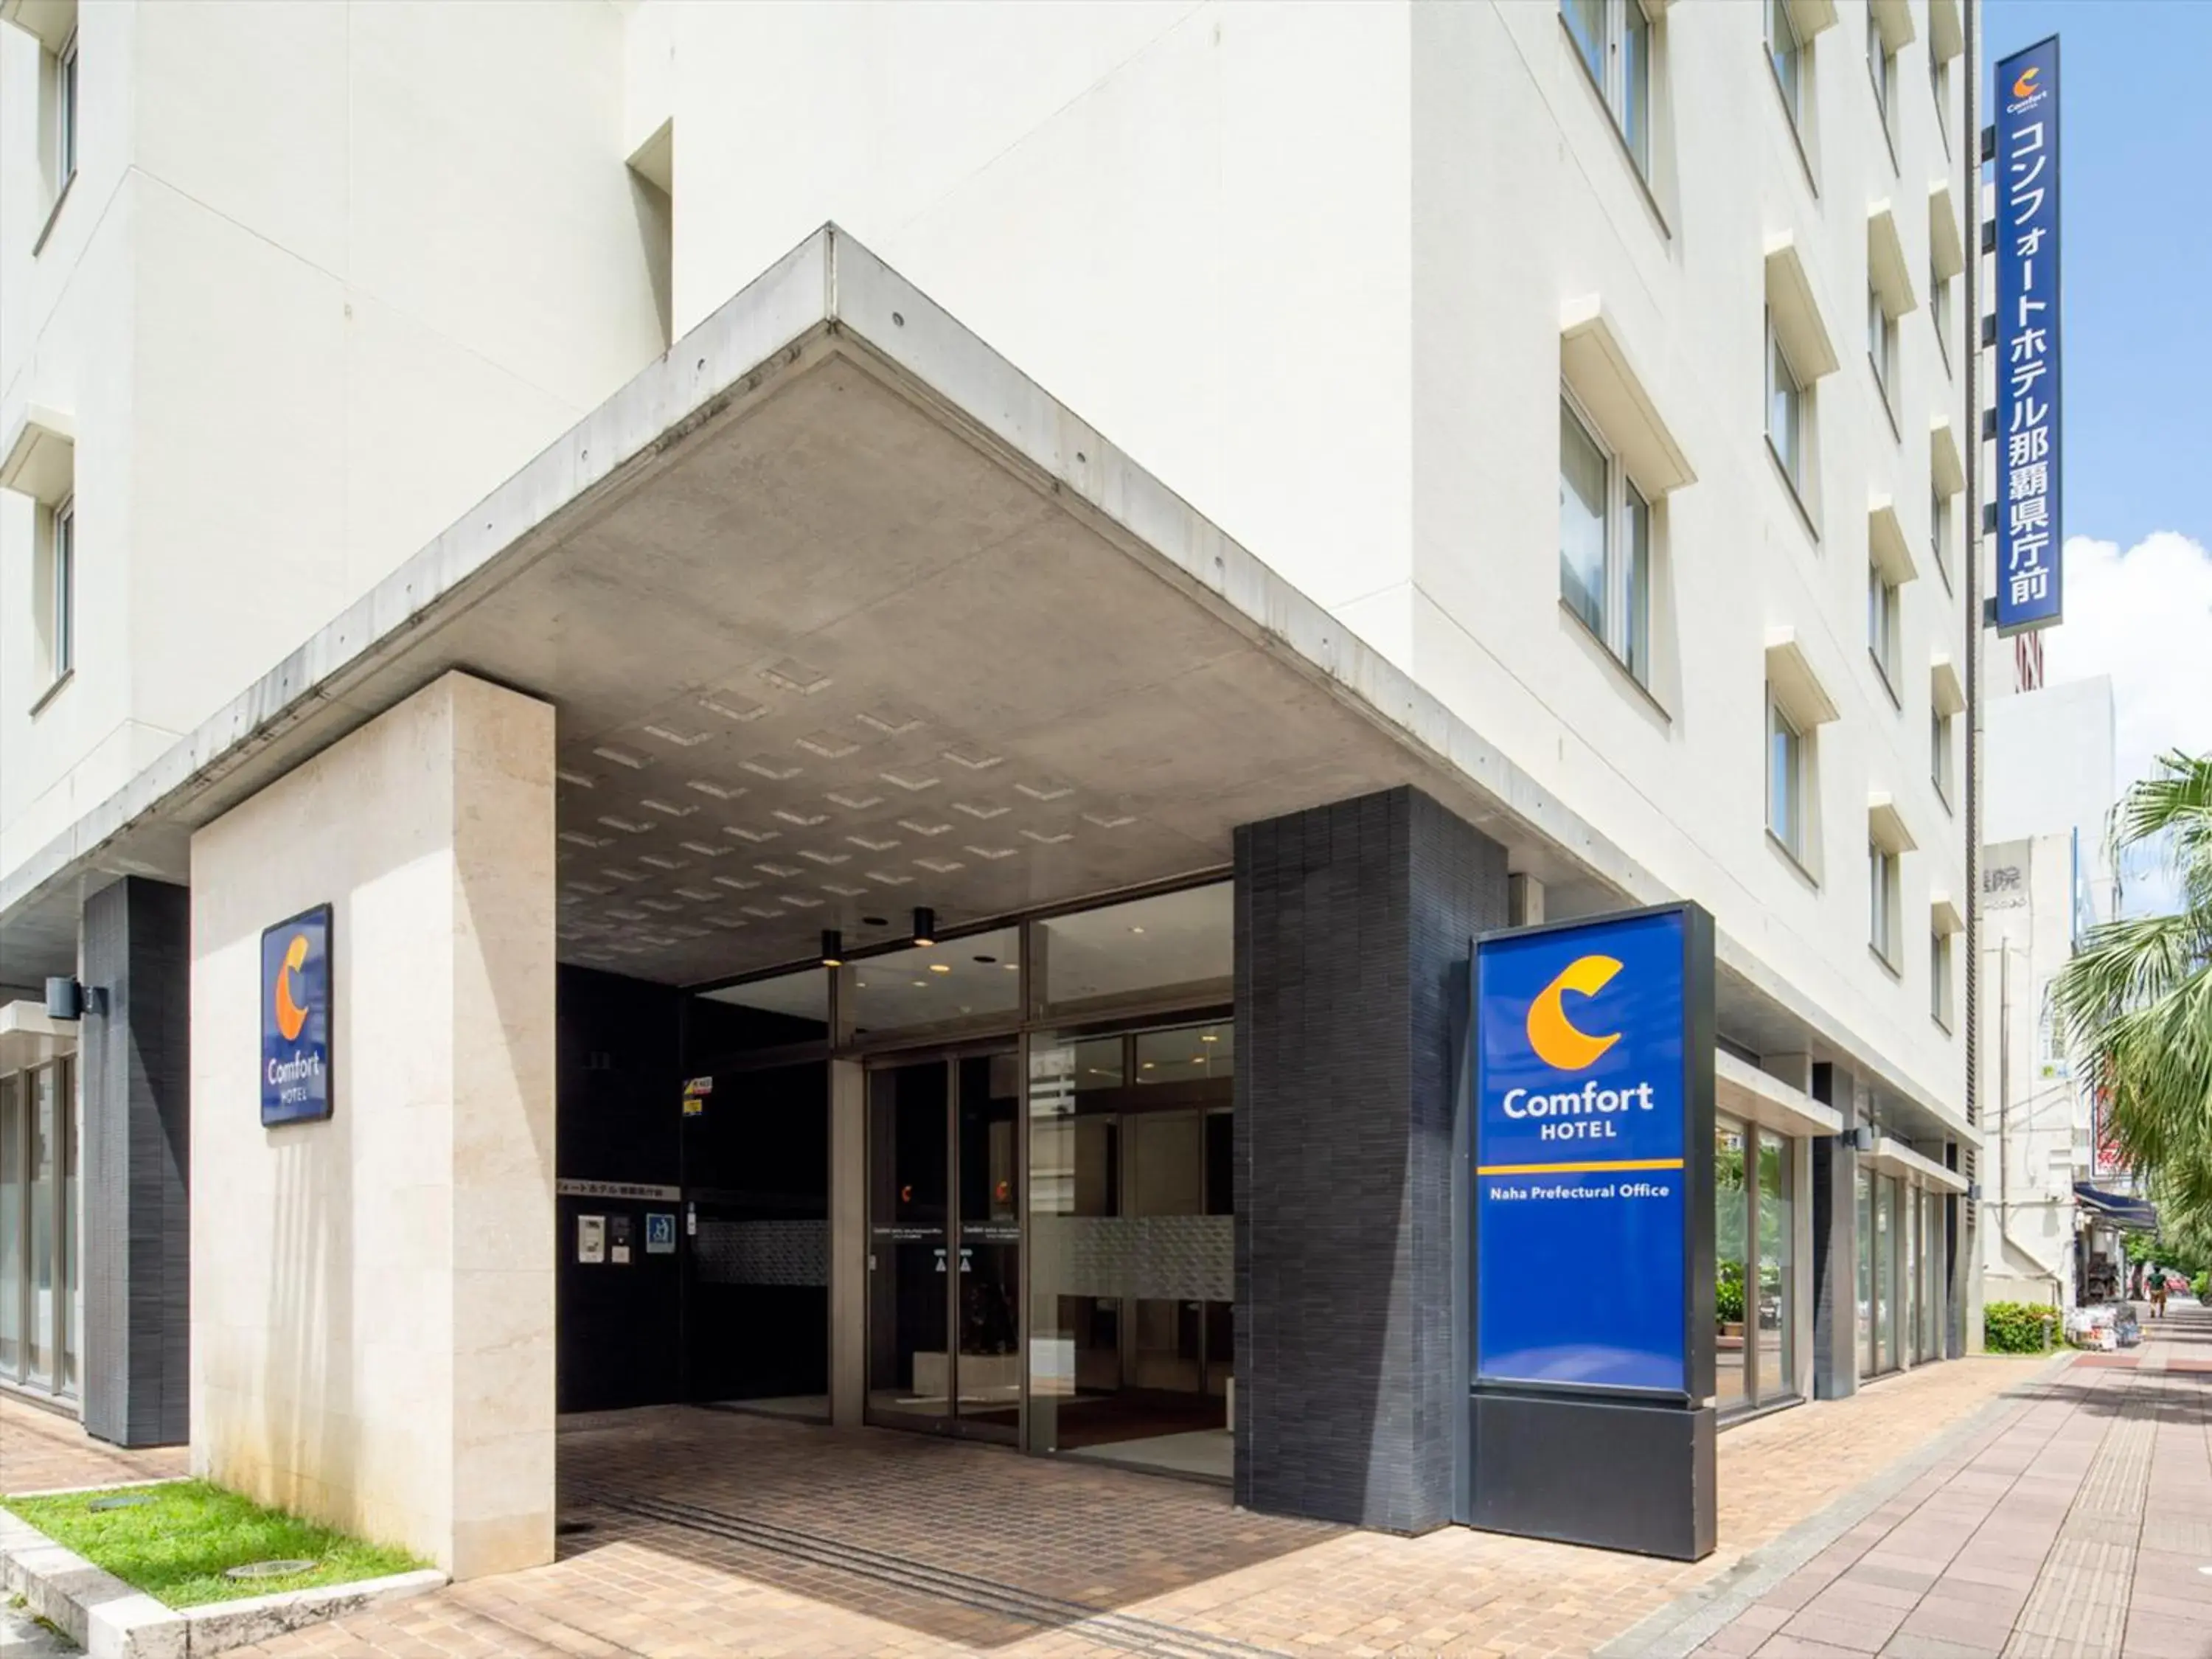 Facade/entrance, Property Building in Comfort Hotel Naha Prefectural Office